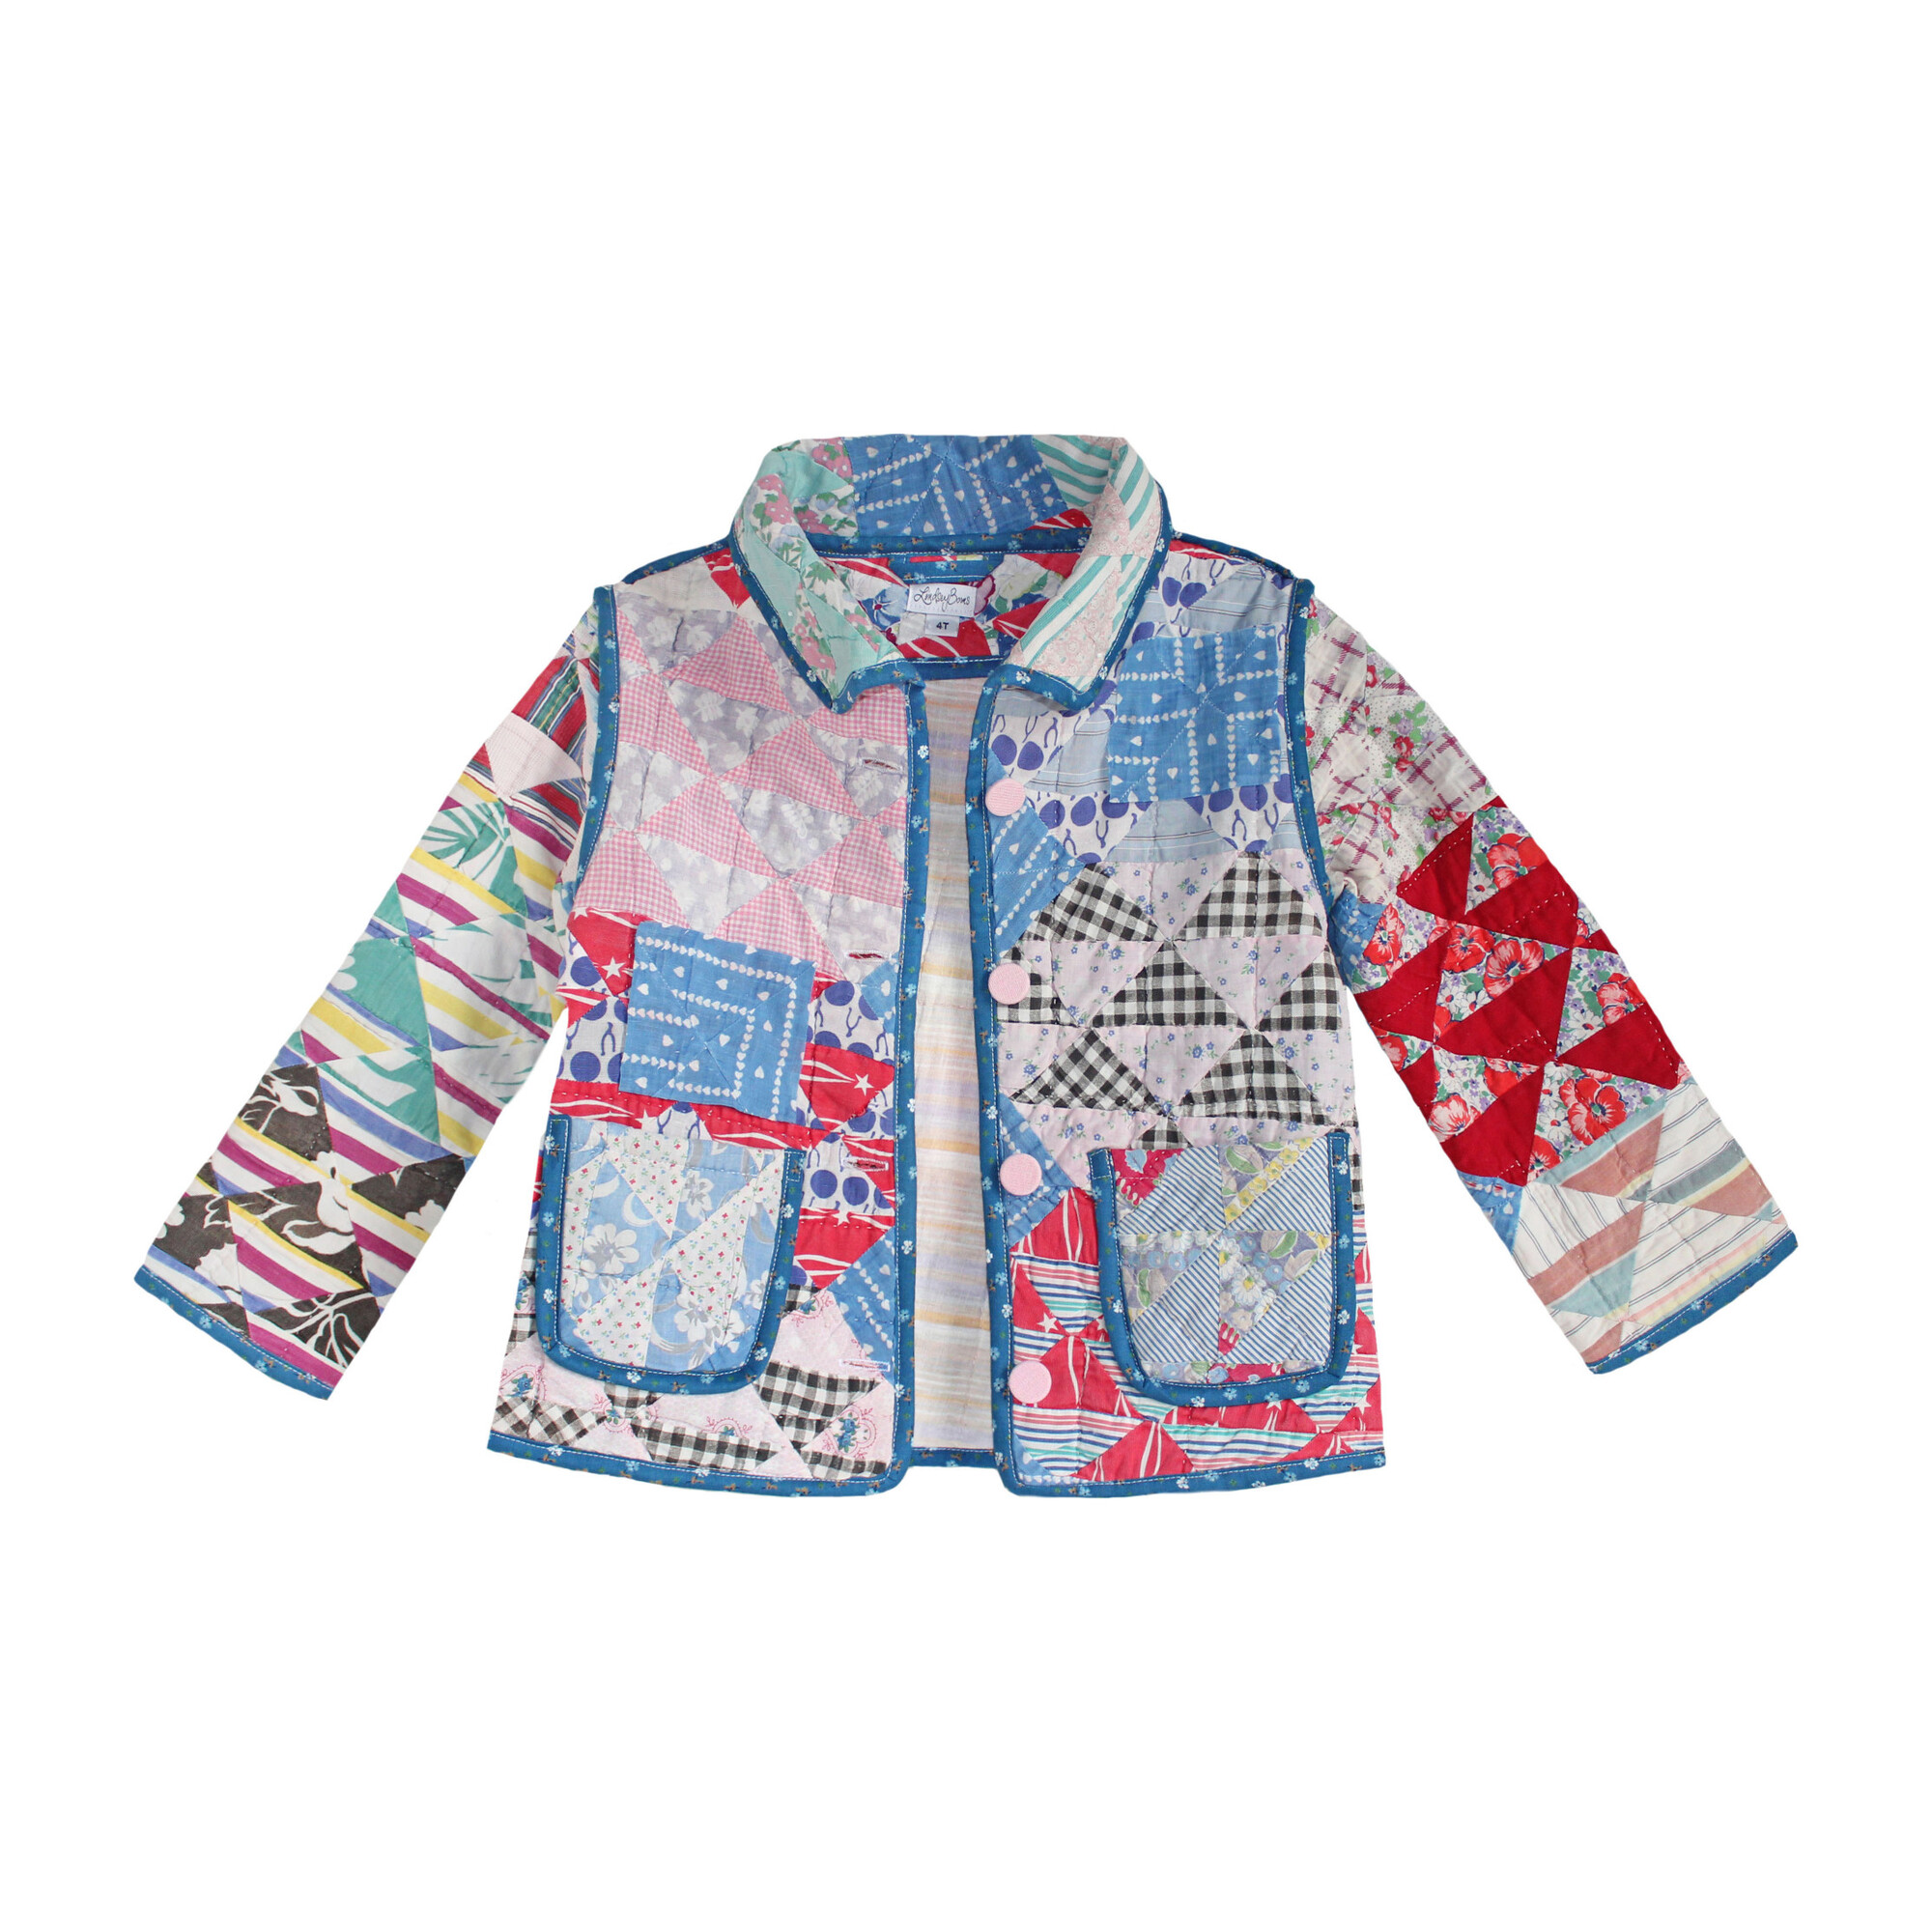 Exclusive* Multi Patch Vintage Quilt Jacket - 4y - Lindsey Berns